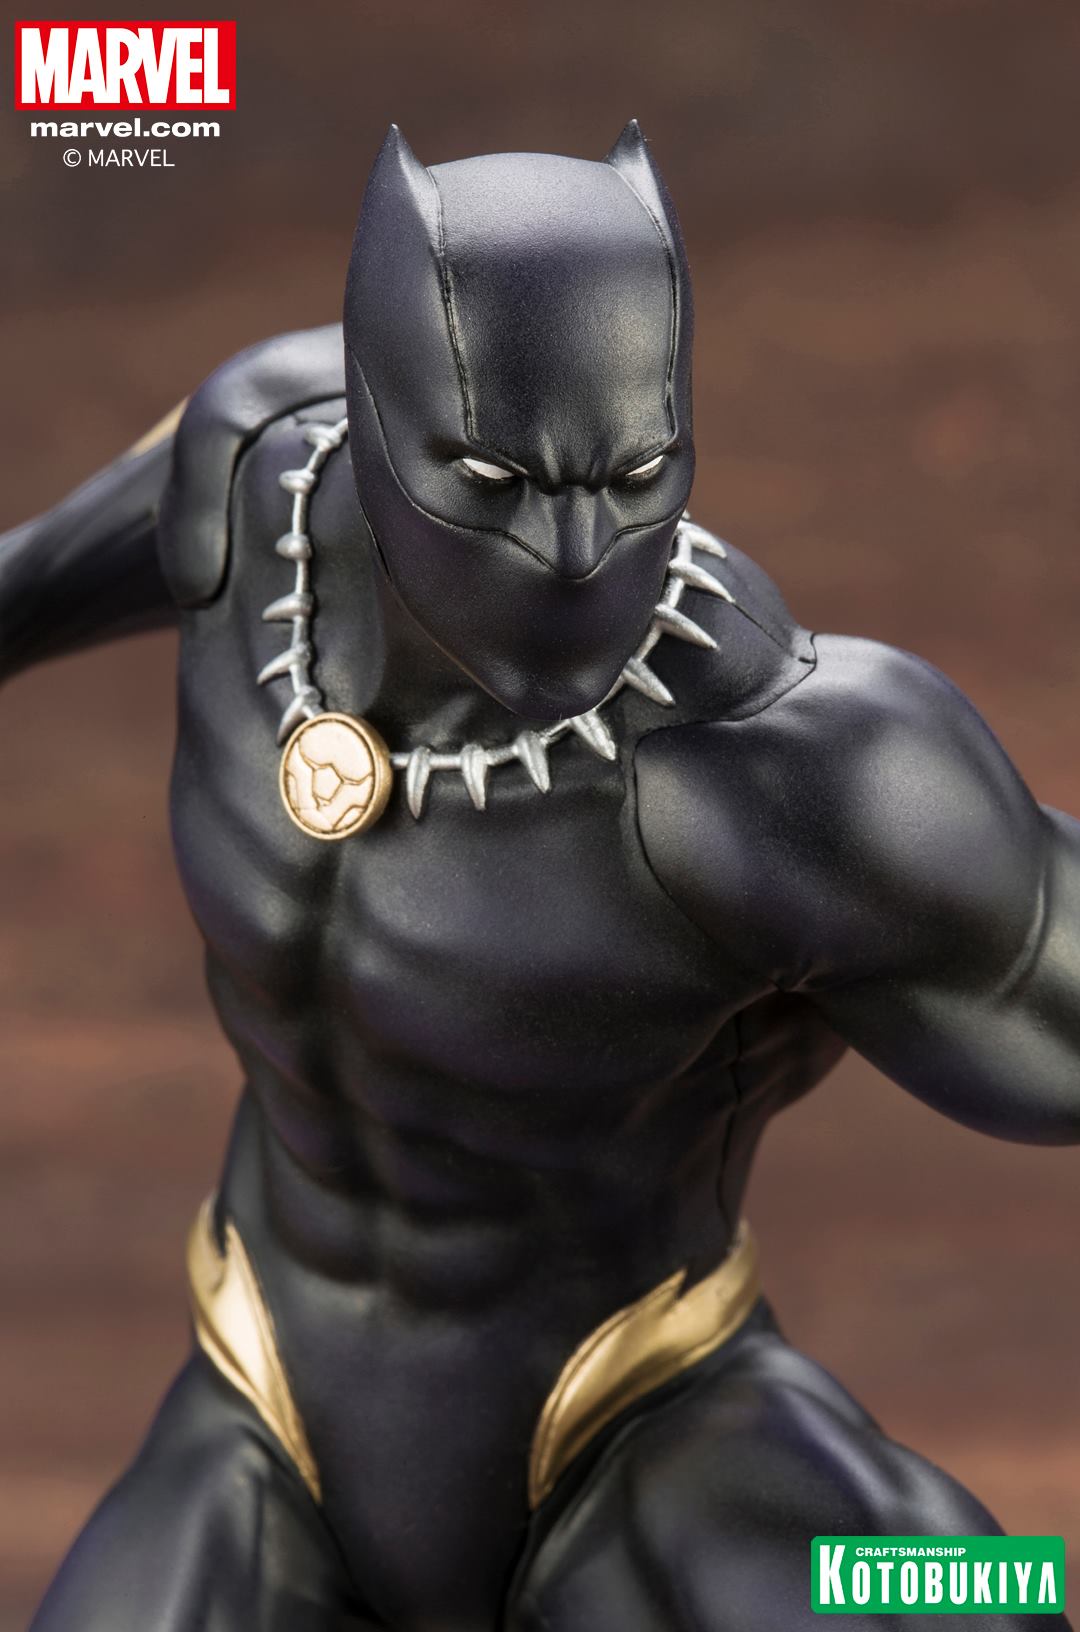 Kotobukiya Black Panther ARTFX+ Statue Up for Order